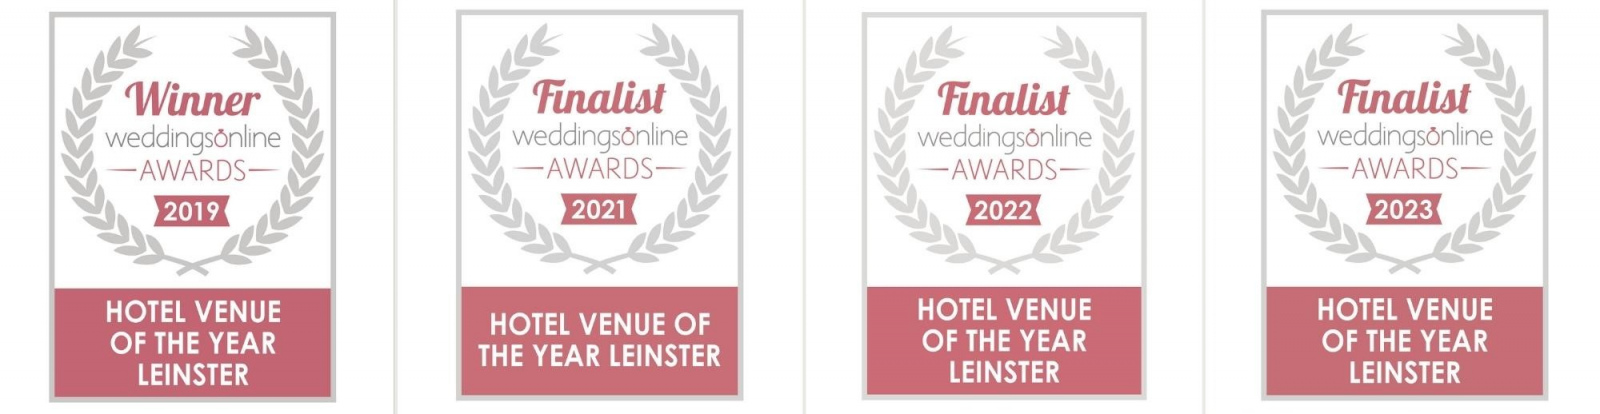 weddings online awards collage 2023